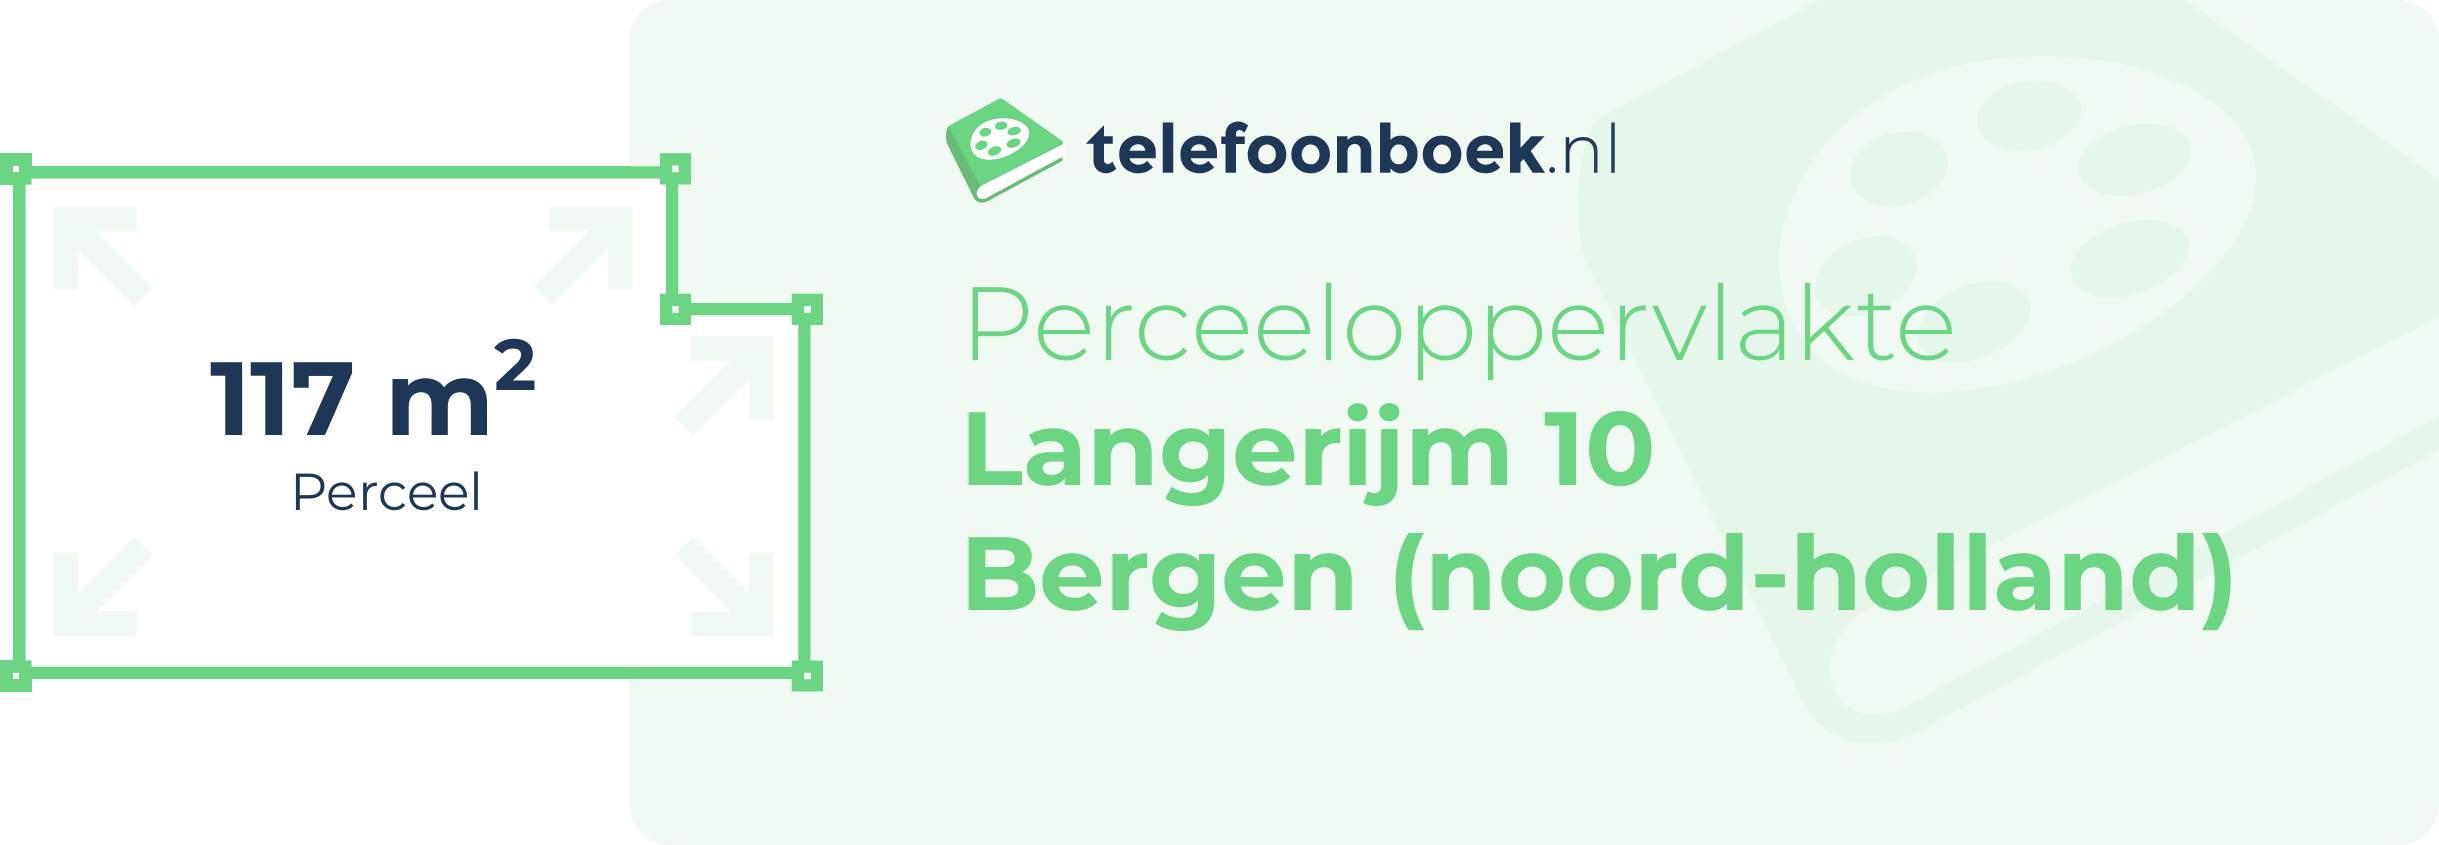 Perceeloppervlakte Langerijm 10 Bergen (Noord-Holland)